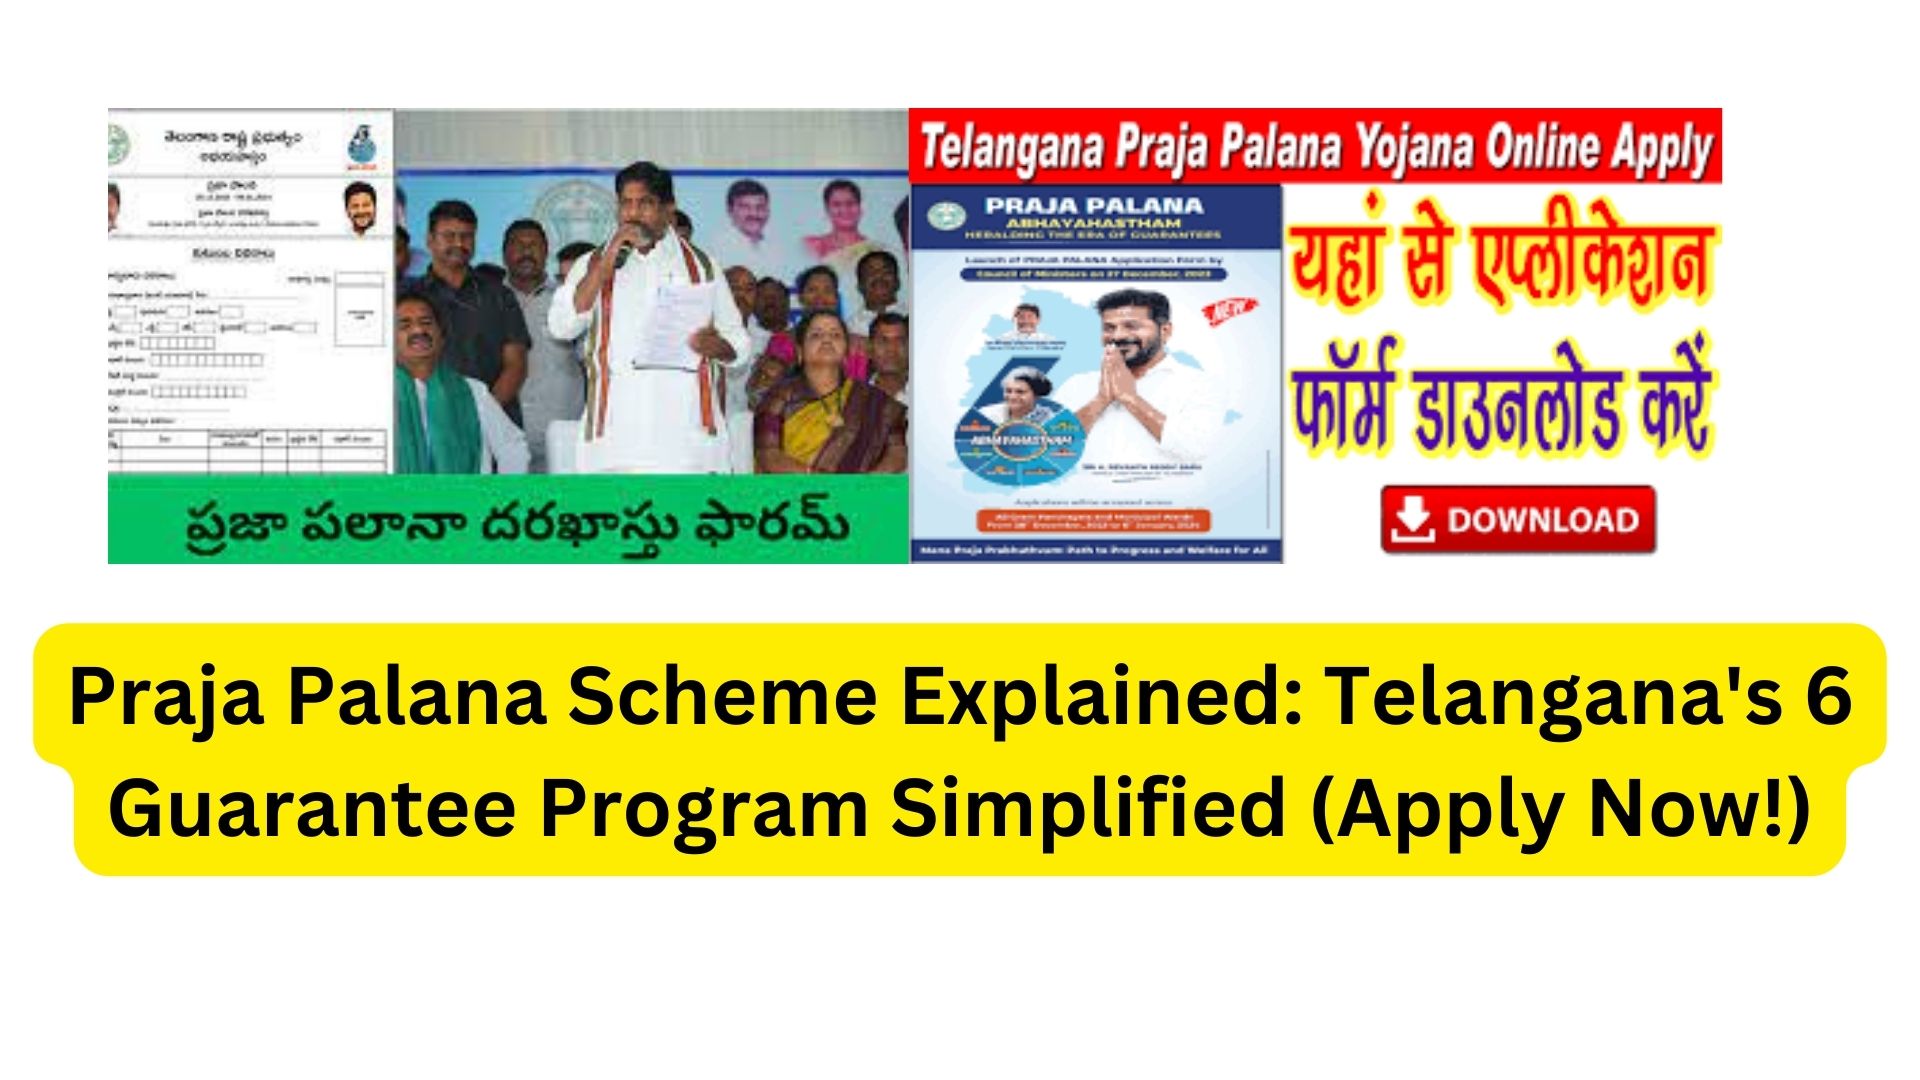 Praja Palana Scheme Explained: Telangana's 6 Guarantee Program Simplified (Apply Now!)